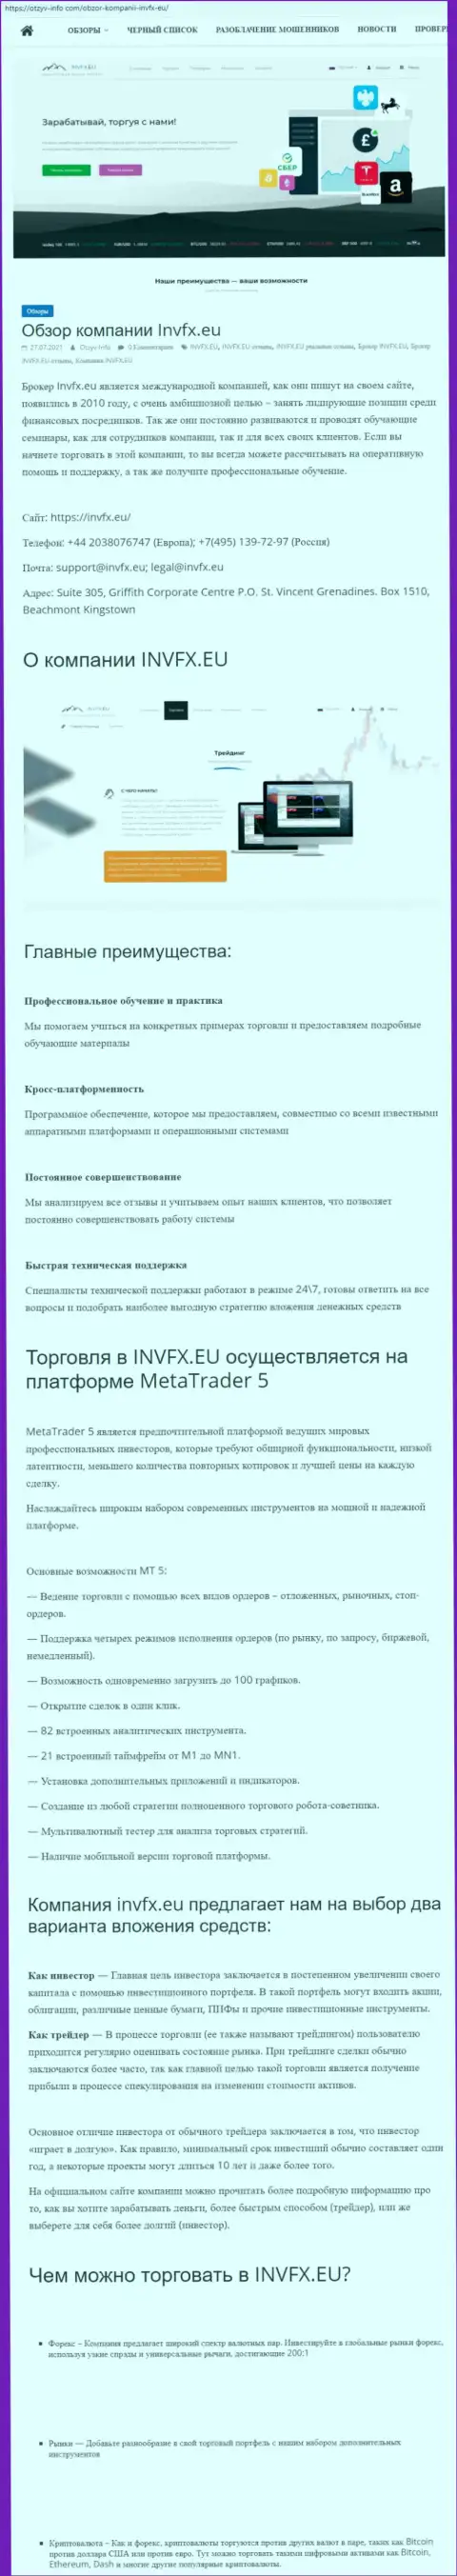 Портал Otzyv Info Com опубликовал статью о forex-дилере INVFX Eu